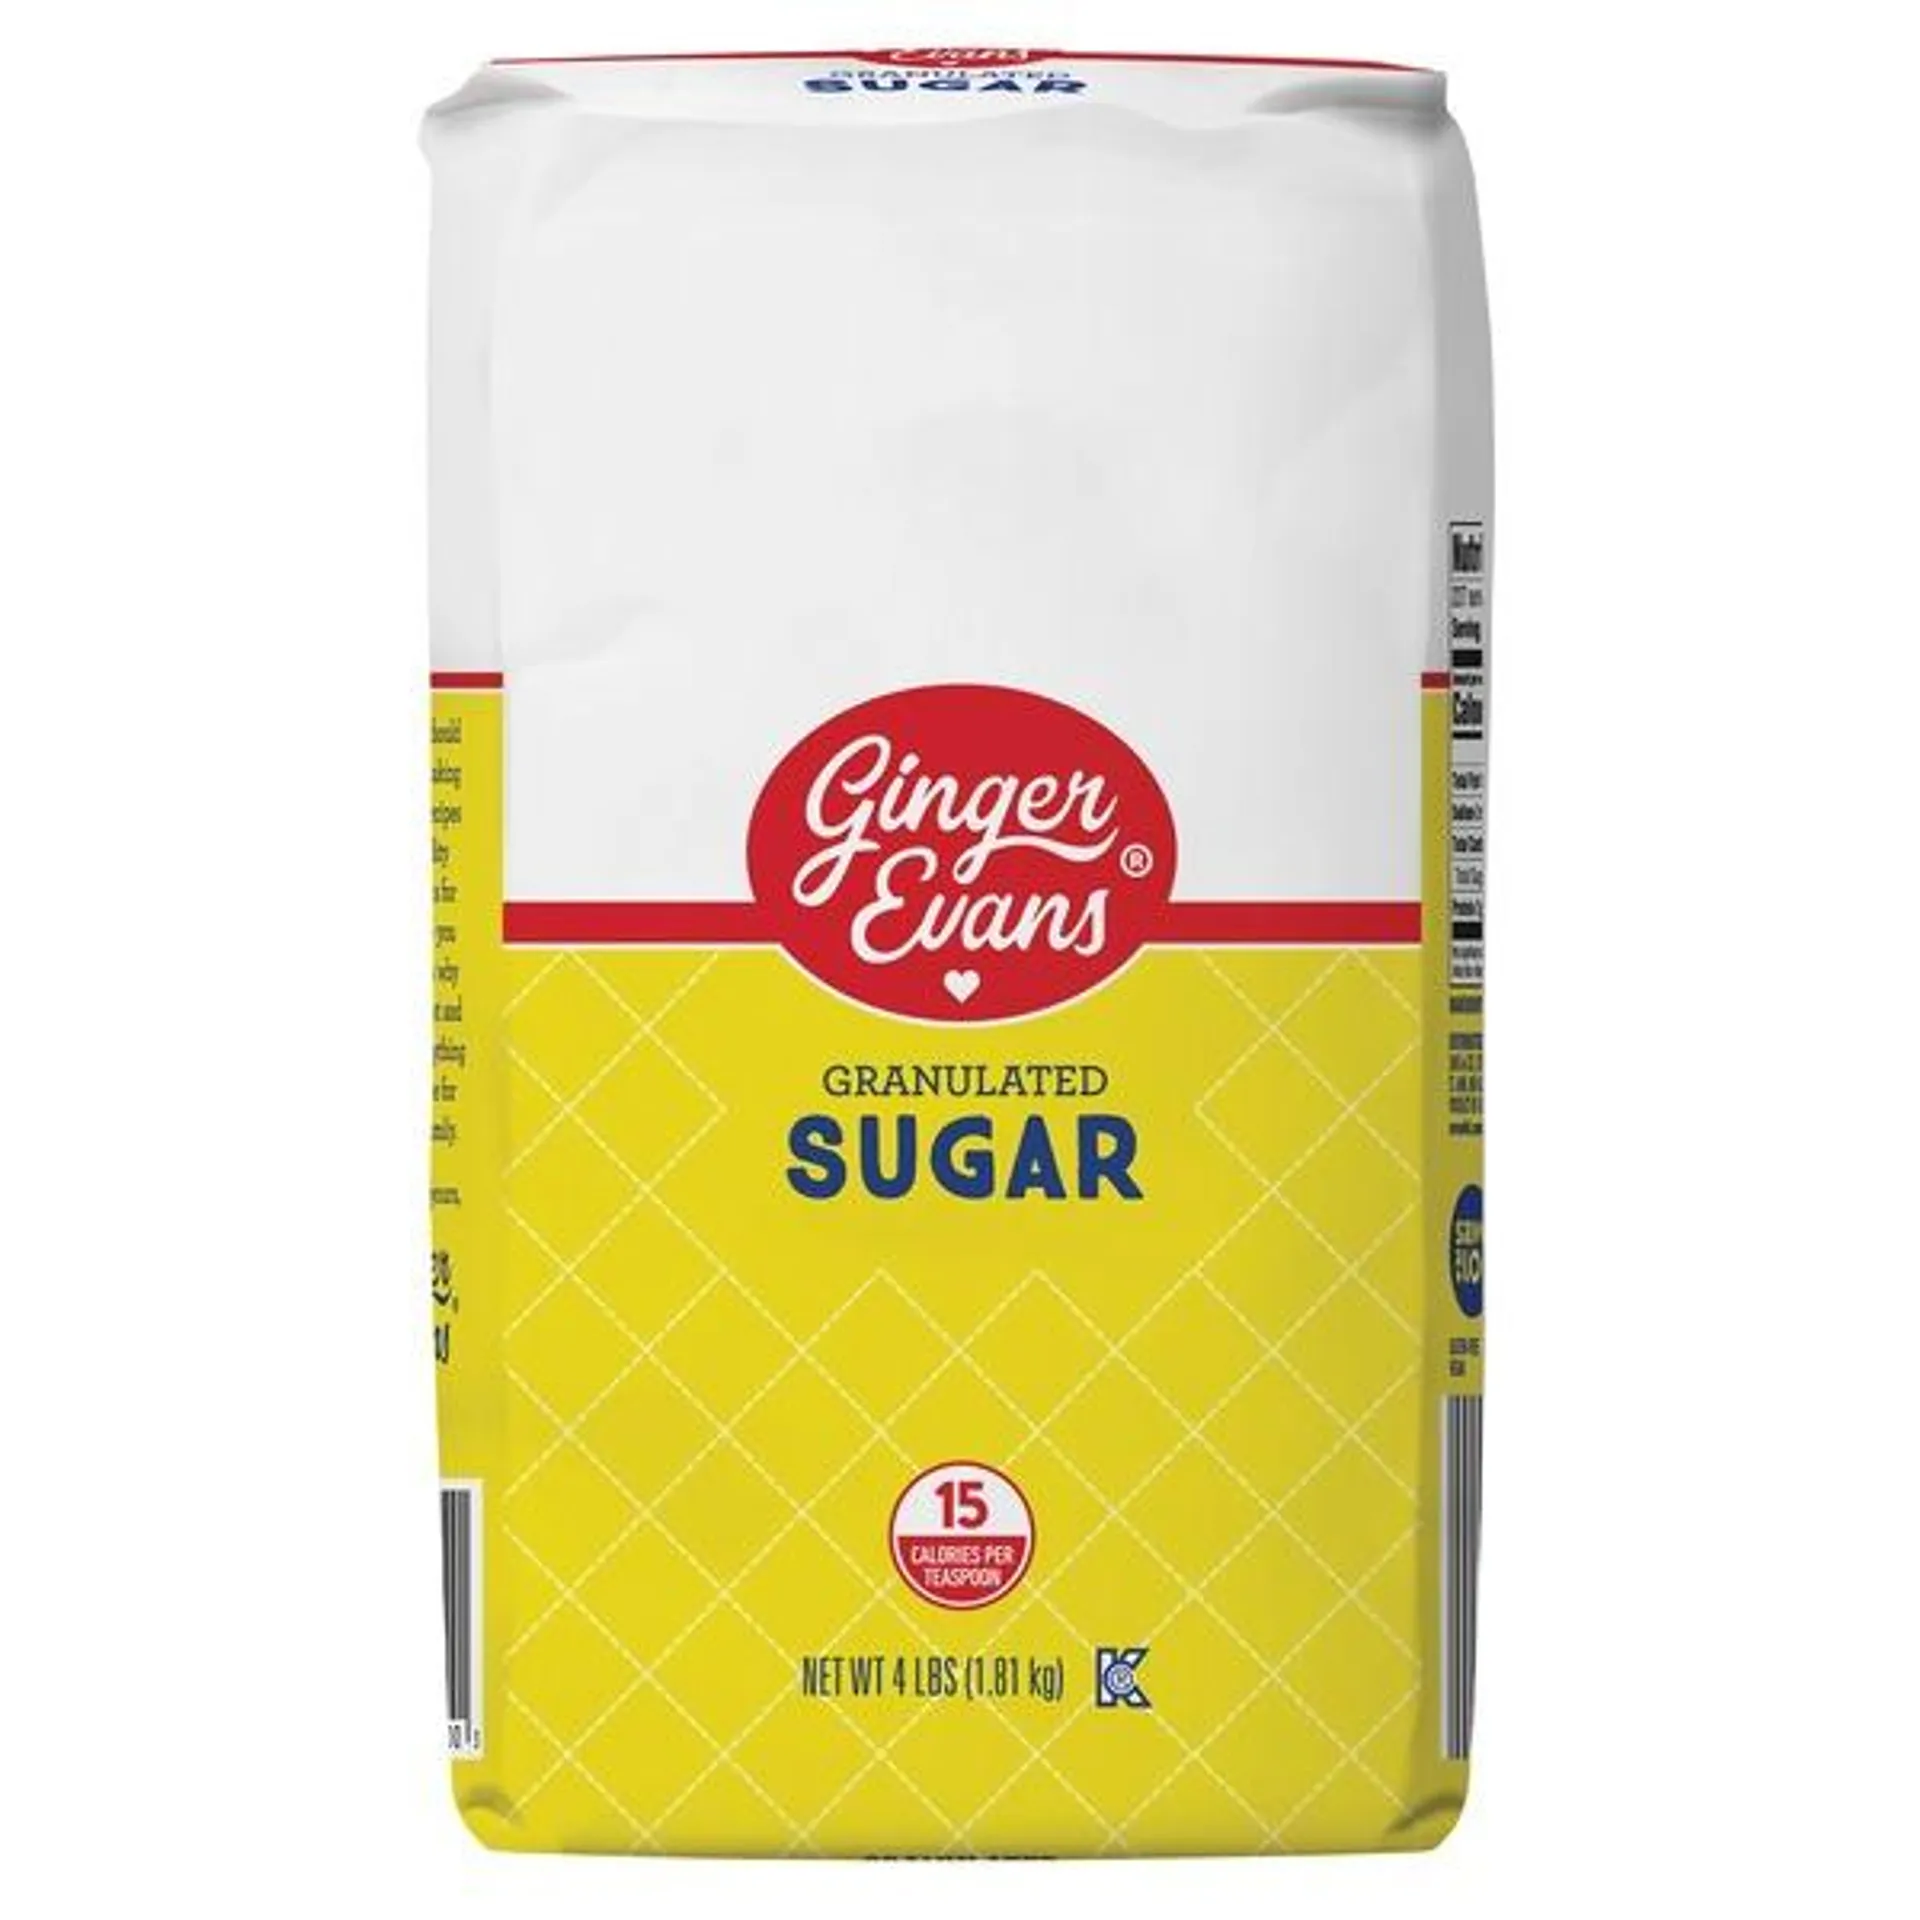 Ginger Evans Granulated Sugar